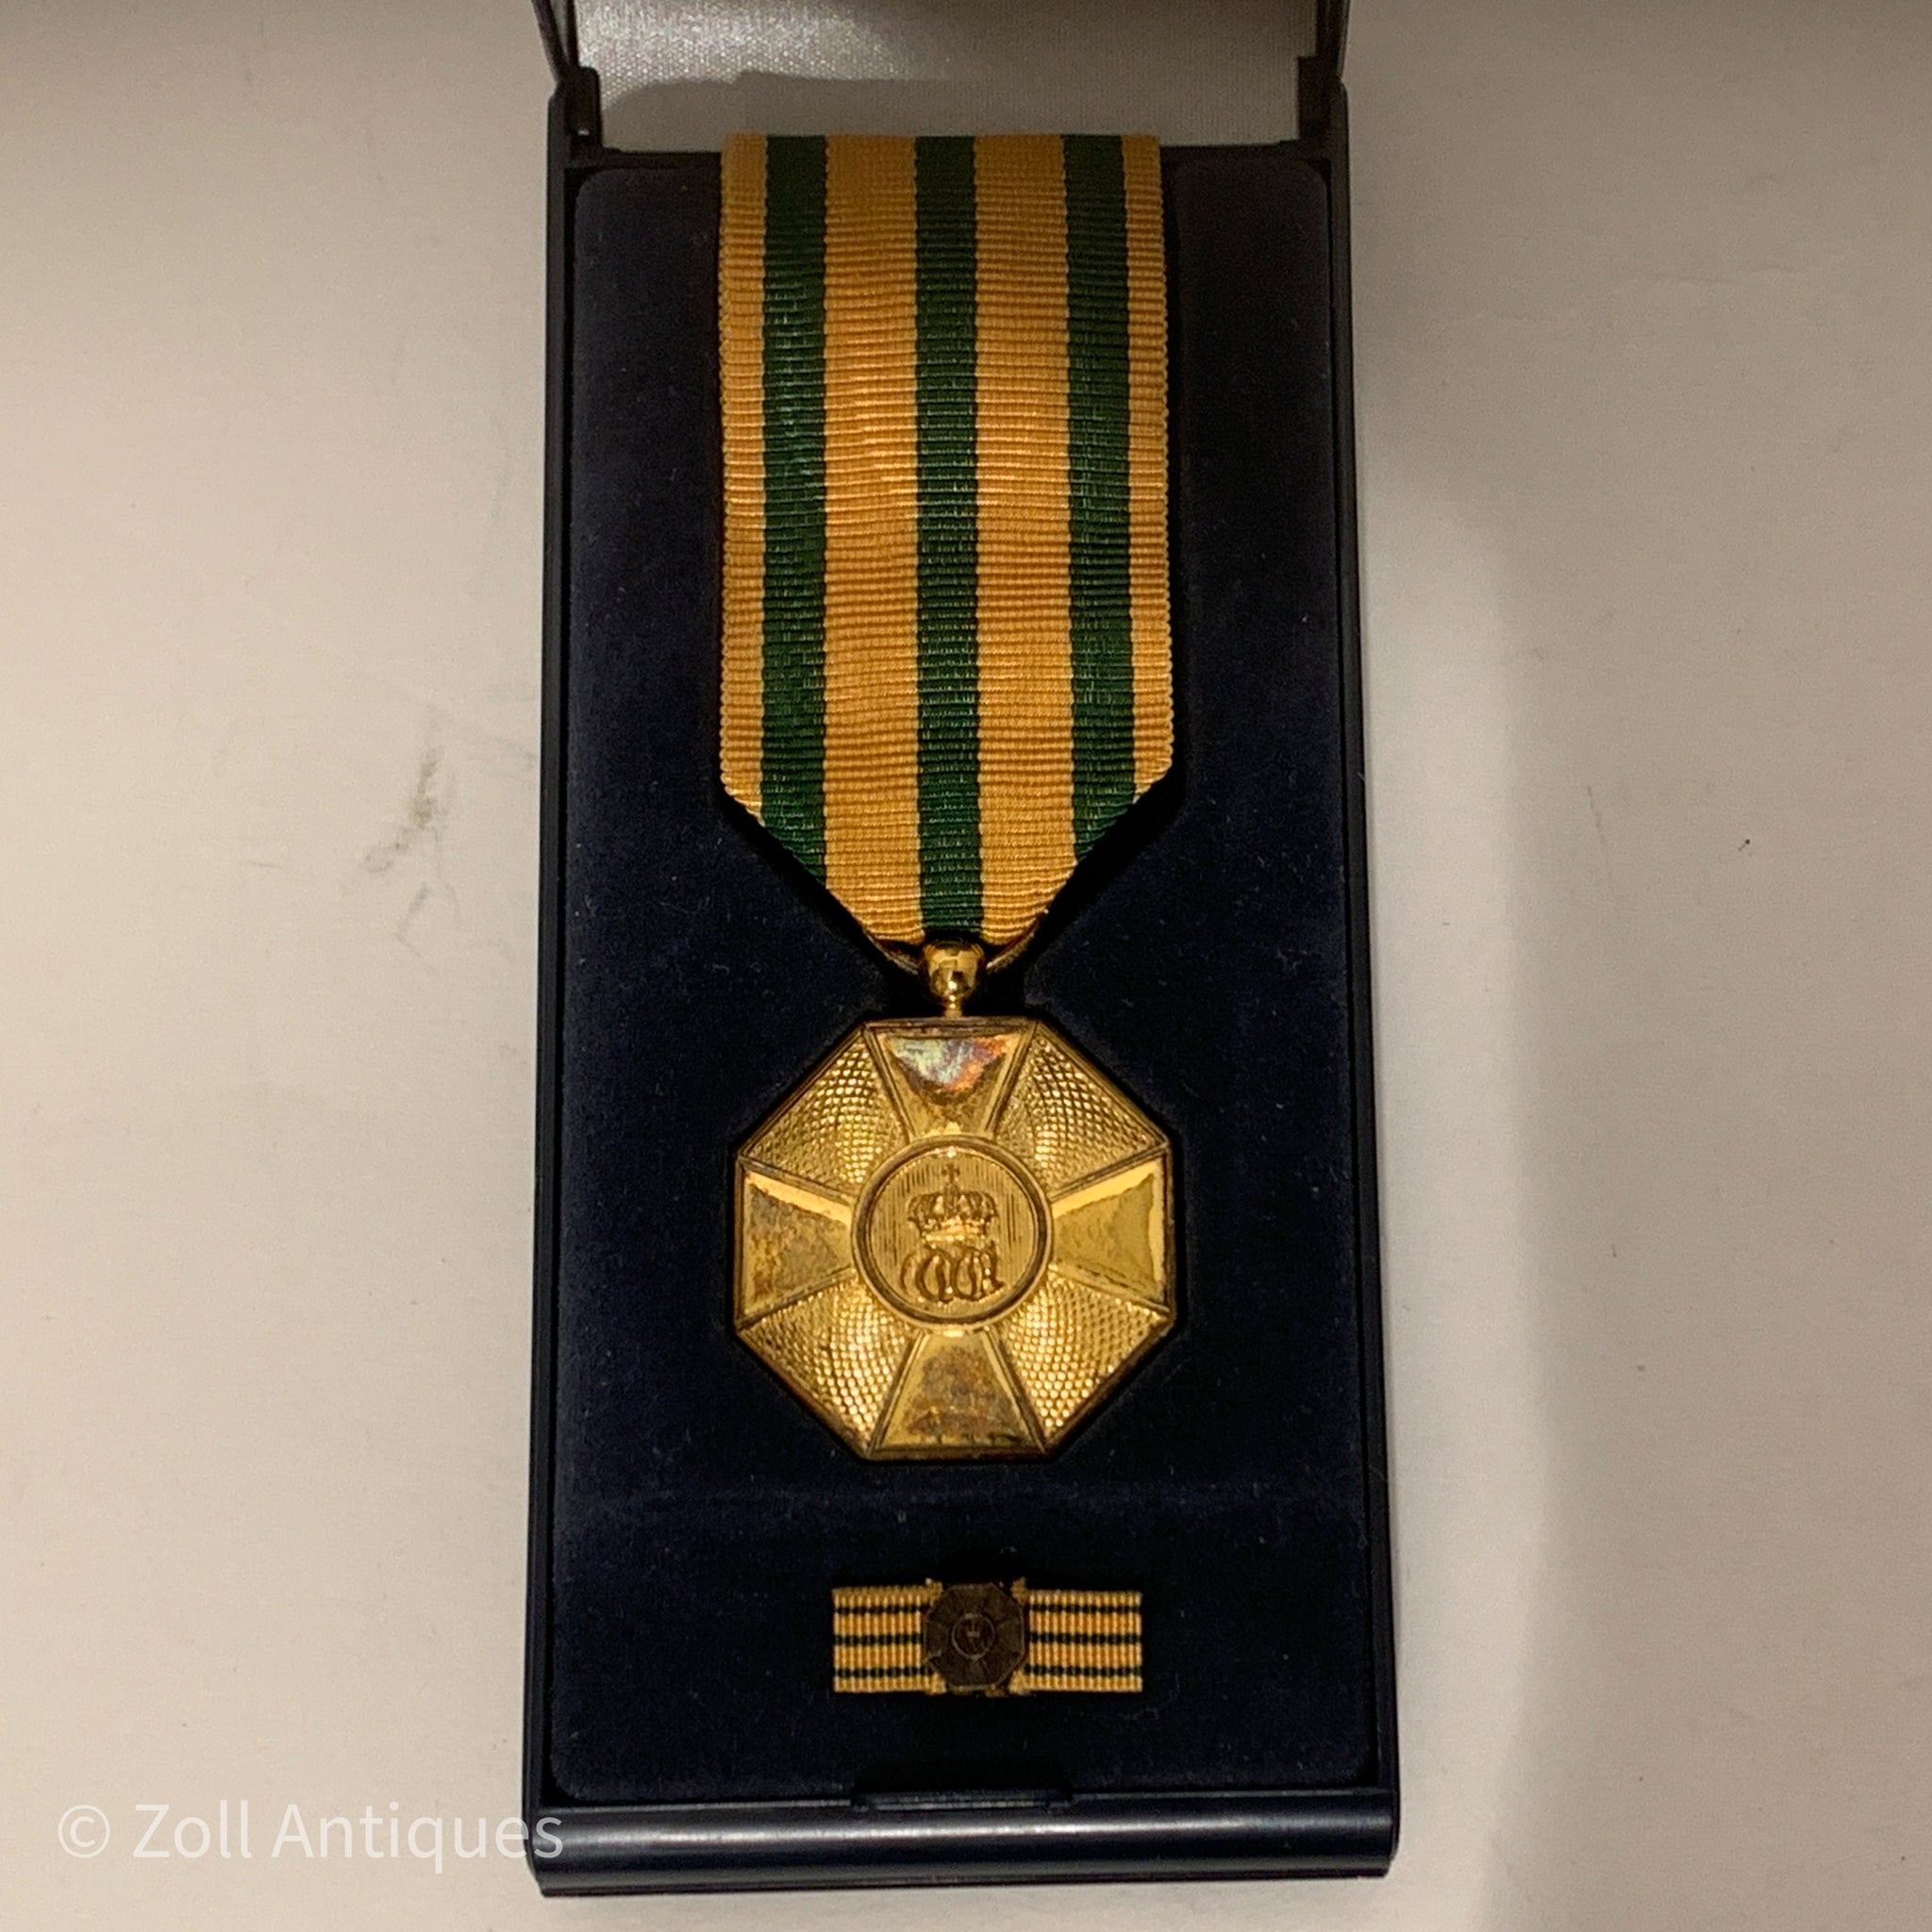 Luxembourg fortjenstmedalje i guld